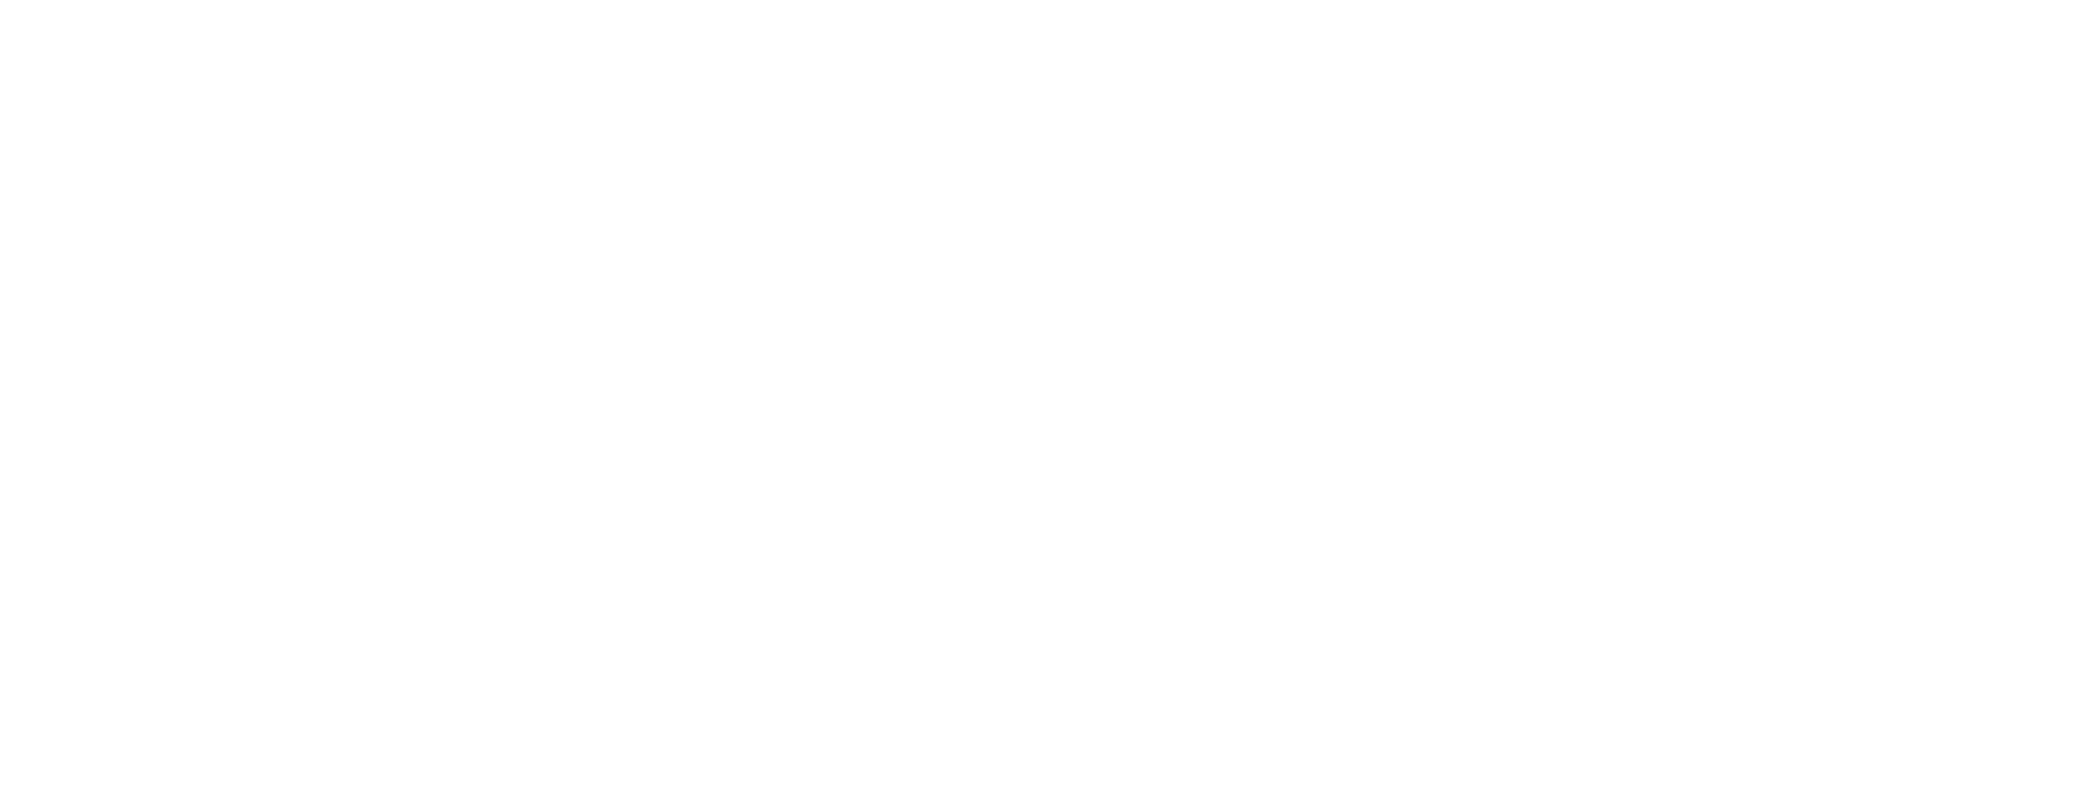 AMD Ryzen + AMD Radeon